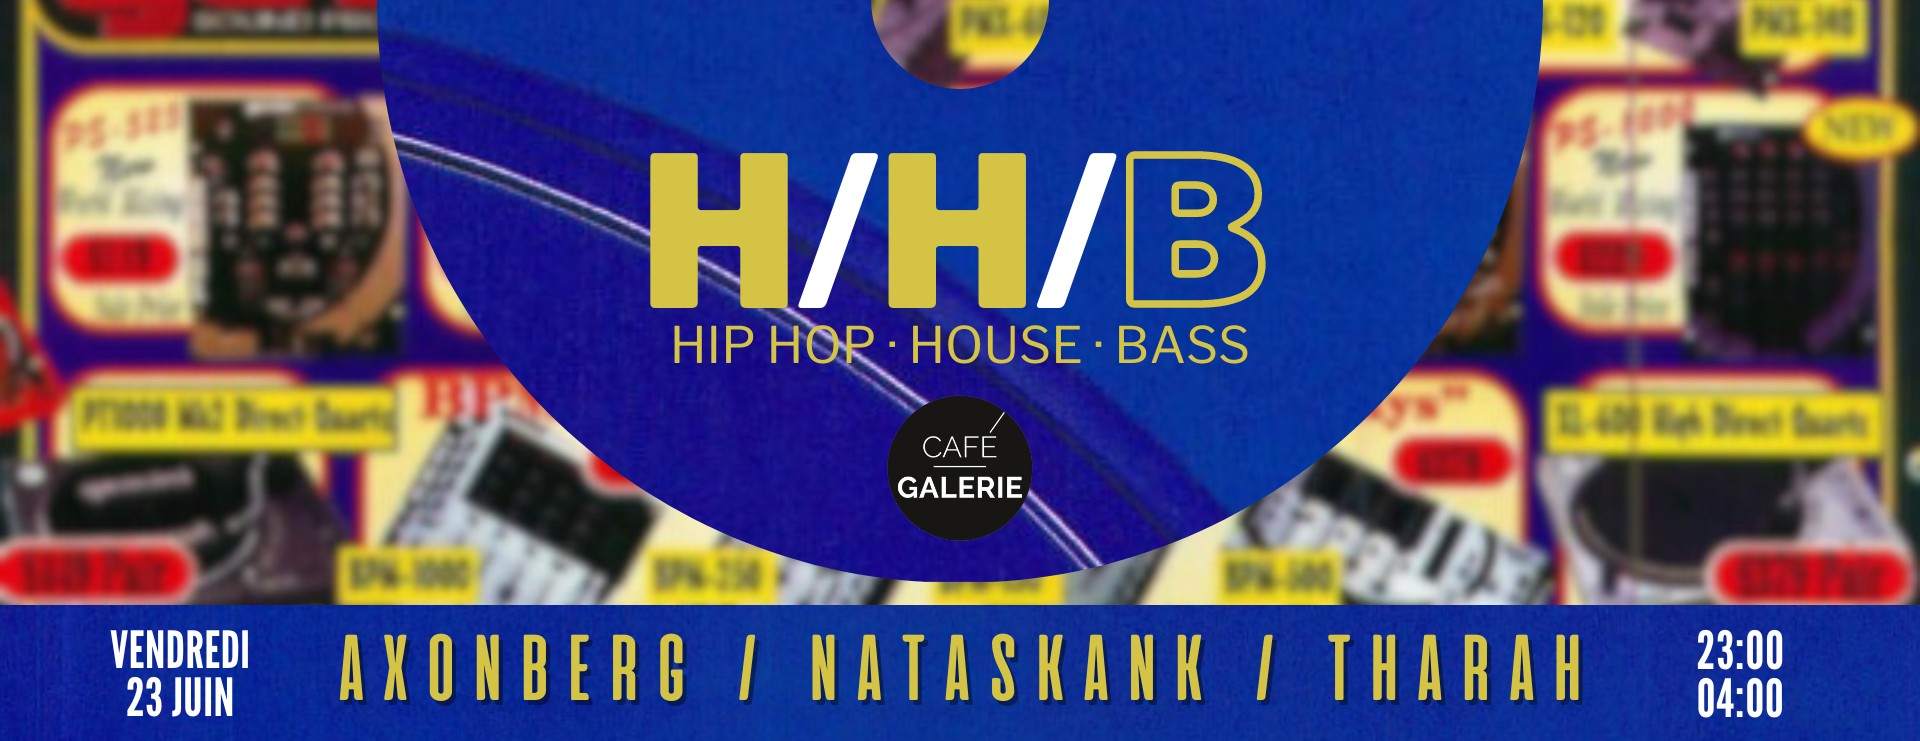 HHB - Café Galerie - フライヤー表